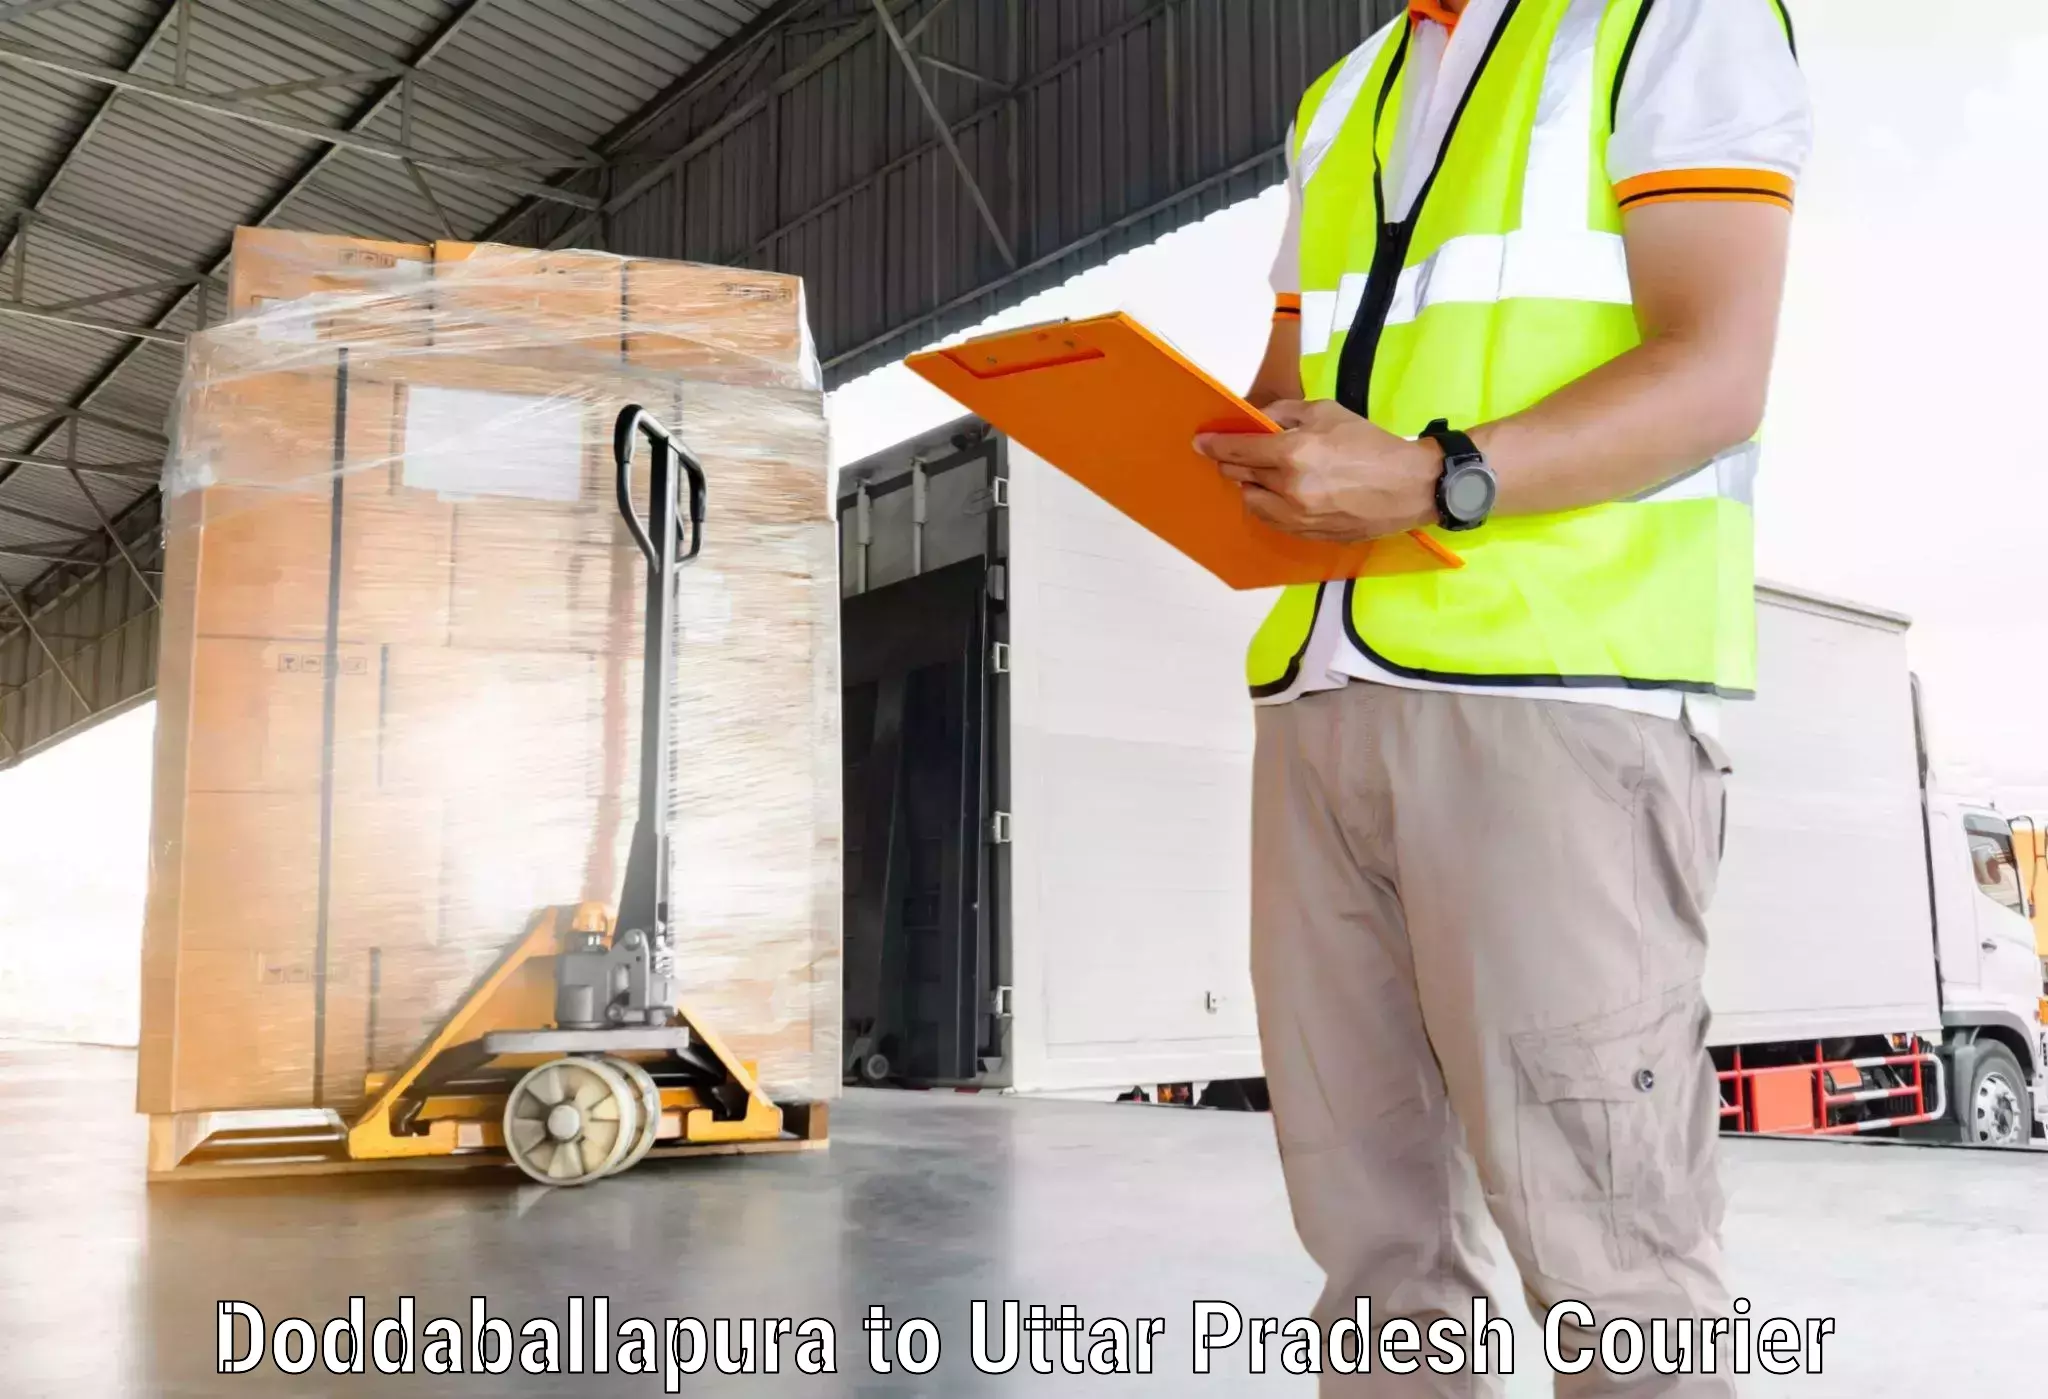 Weekend courier service Doddaballapura to Dhaurahara